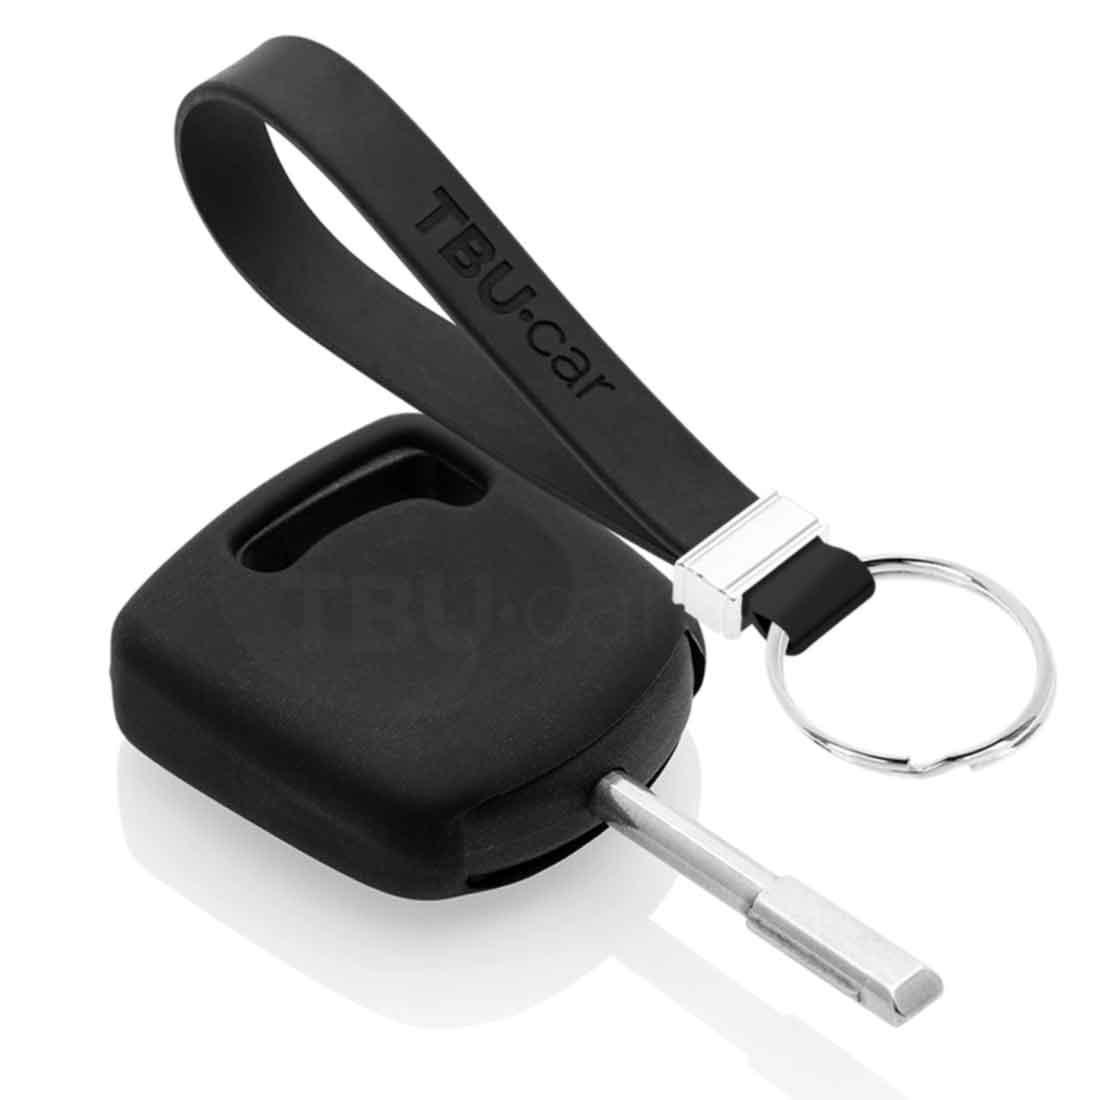 TBU car TBU car Autoschlüssel Hülle kompatibel mit Ford Standardschlüssel - Schutzhülle aus Silikon - Auto Schlüsselhülle Cover in Schwarz